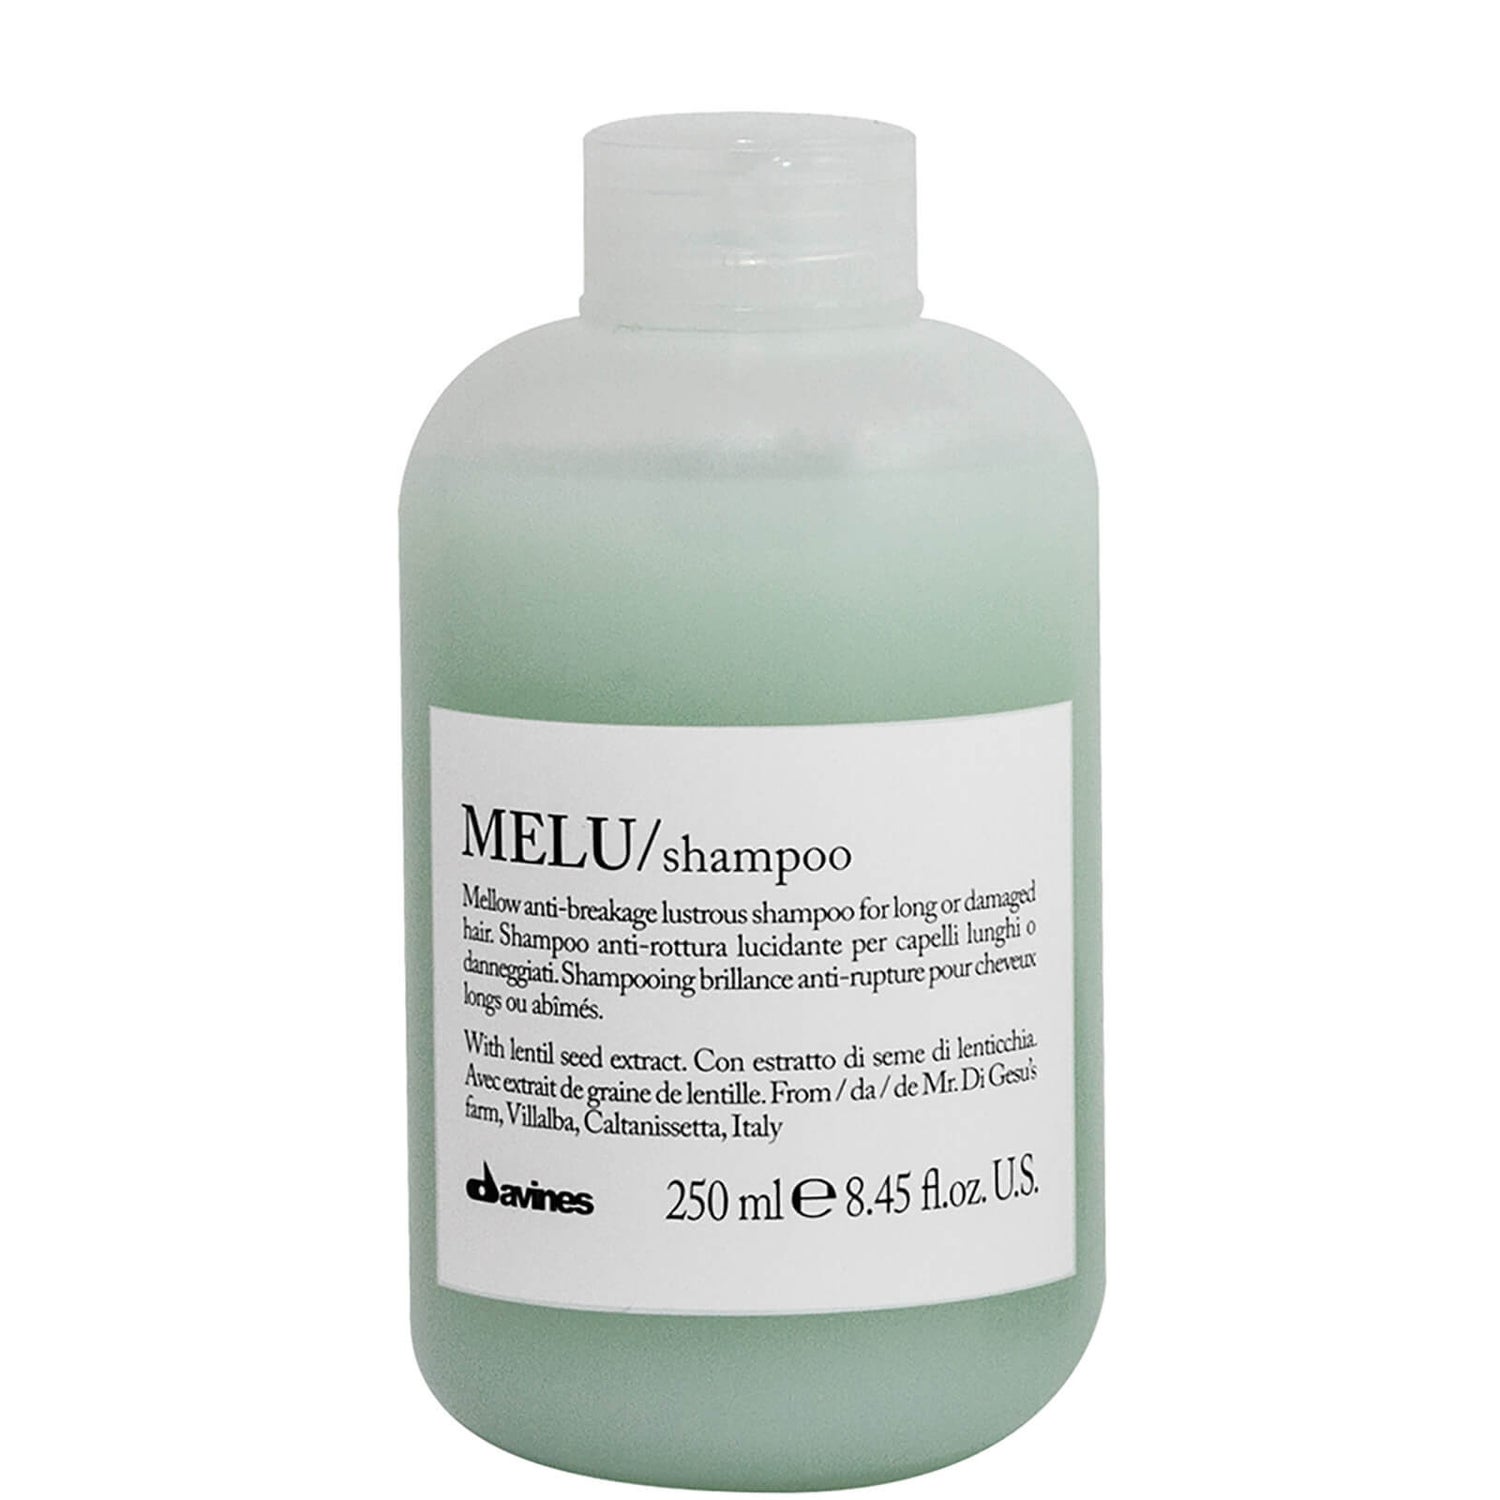 Davines MELU Anti-Breakage Lustrous Shampoo 250ml | Buy Online At RY